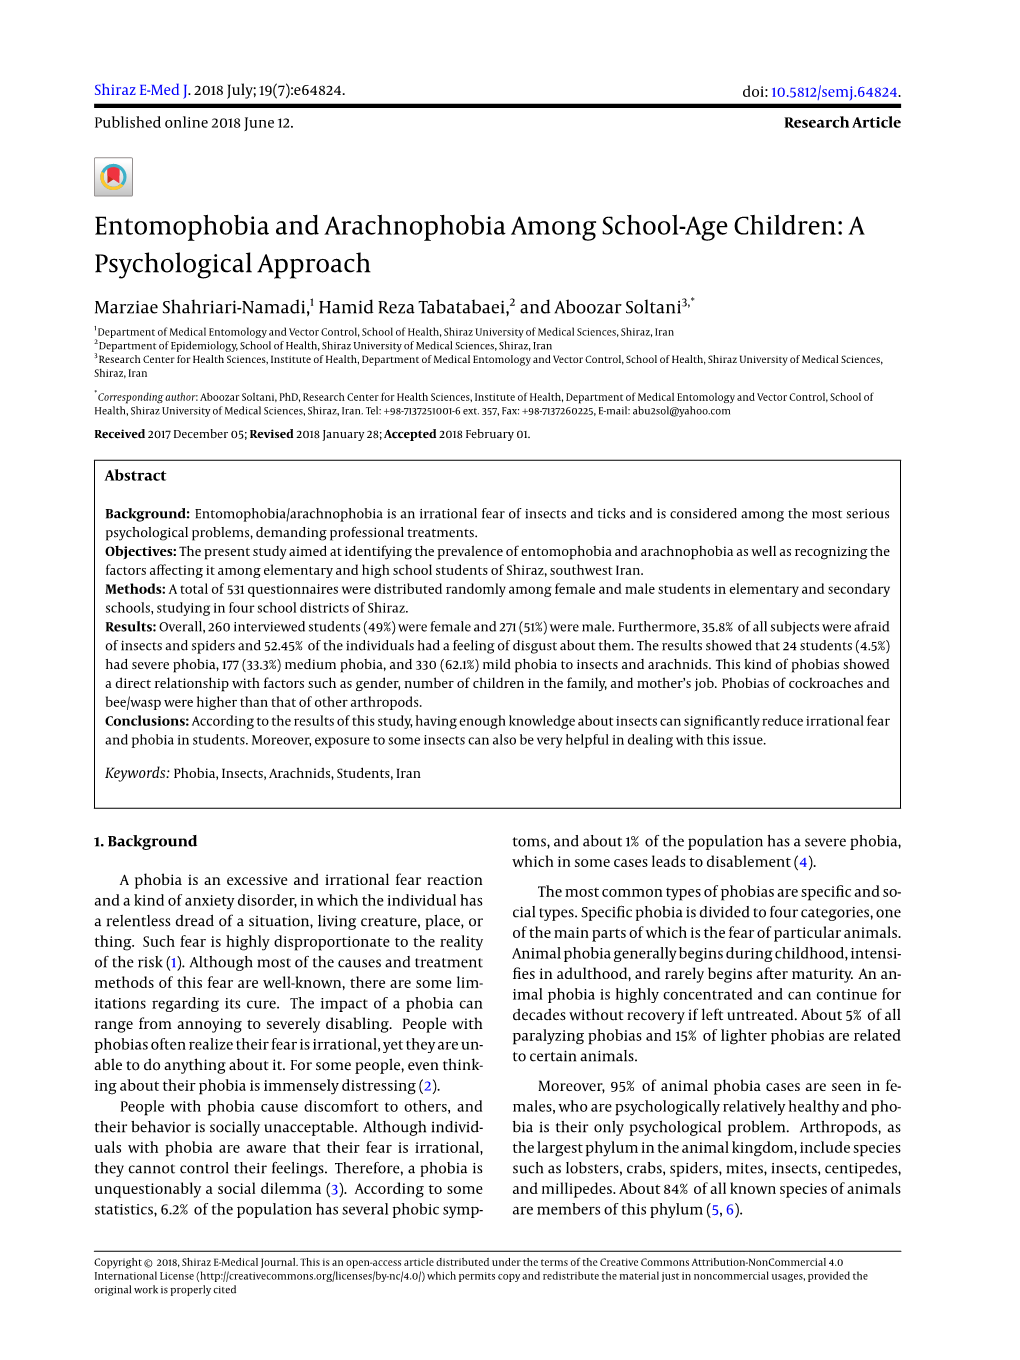 Entomophobia and Arachnophobia Among School-Age Children: a Psychological Approach